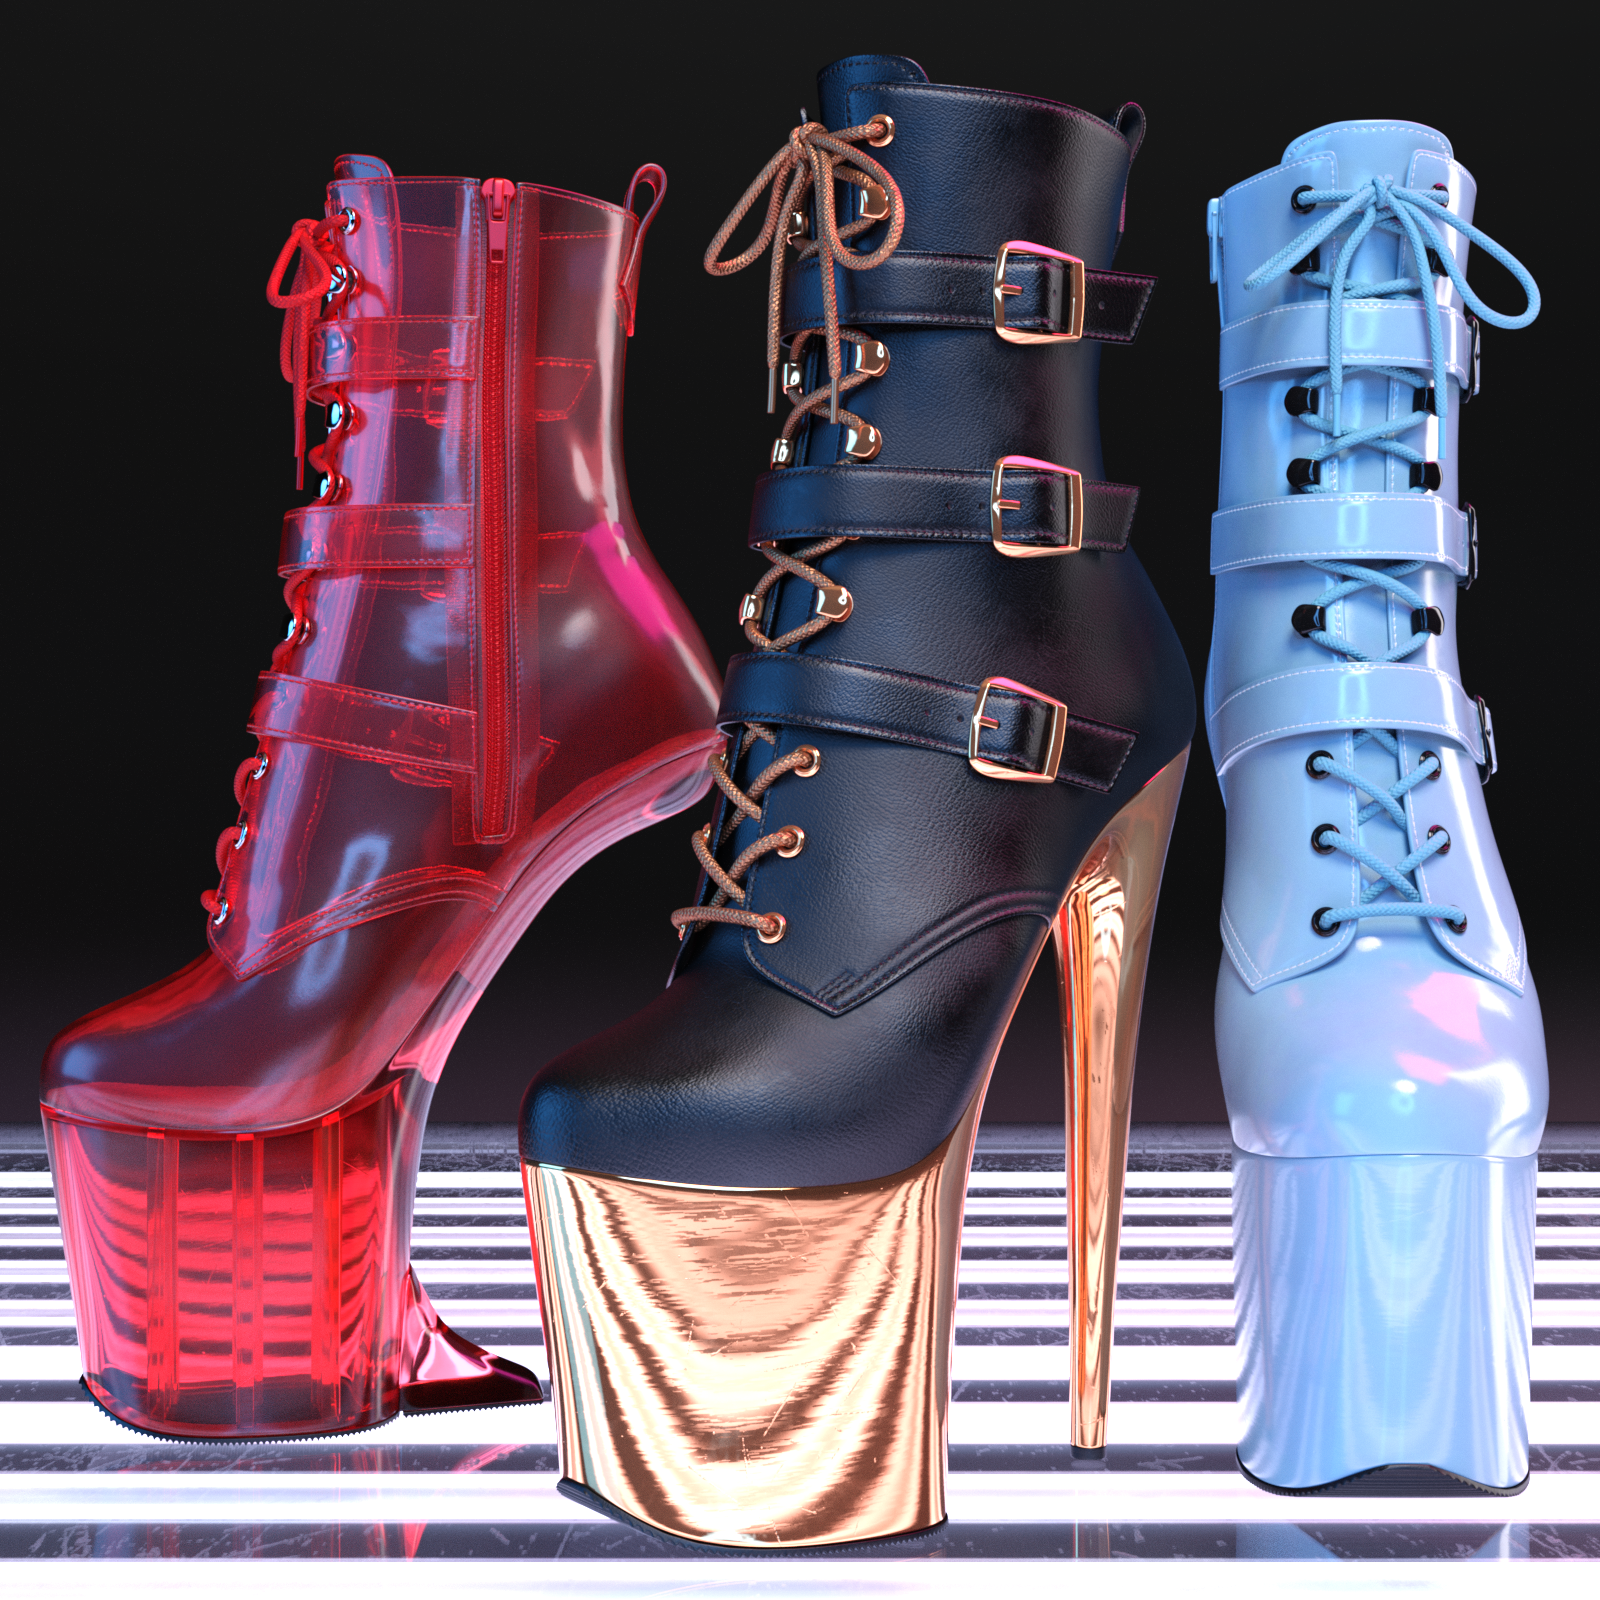 Extreme Platform Ankle Boots for G8F&G9 by: devianttuna13, 3D Models by Daz 3D